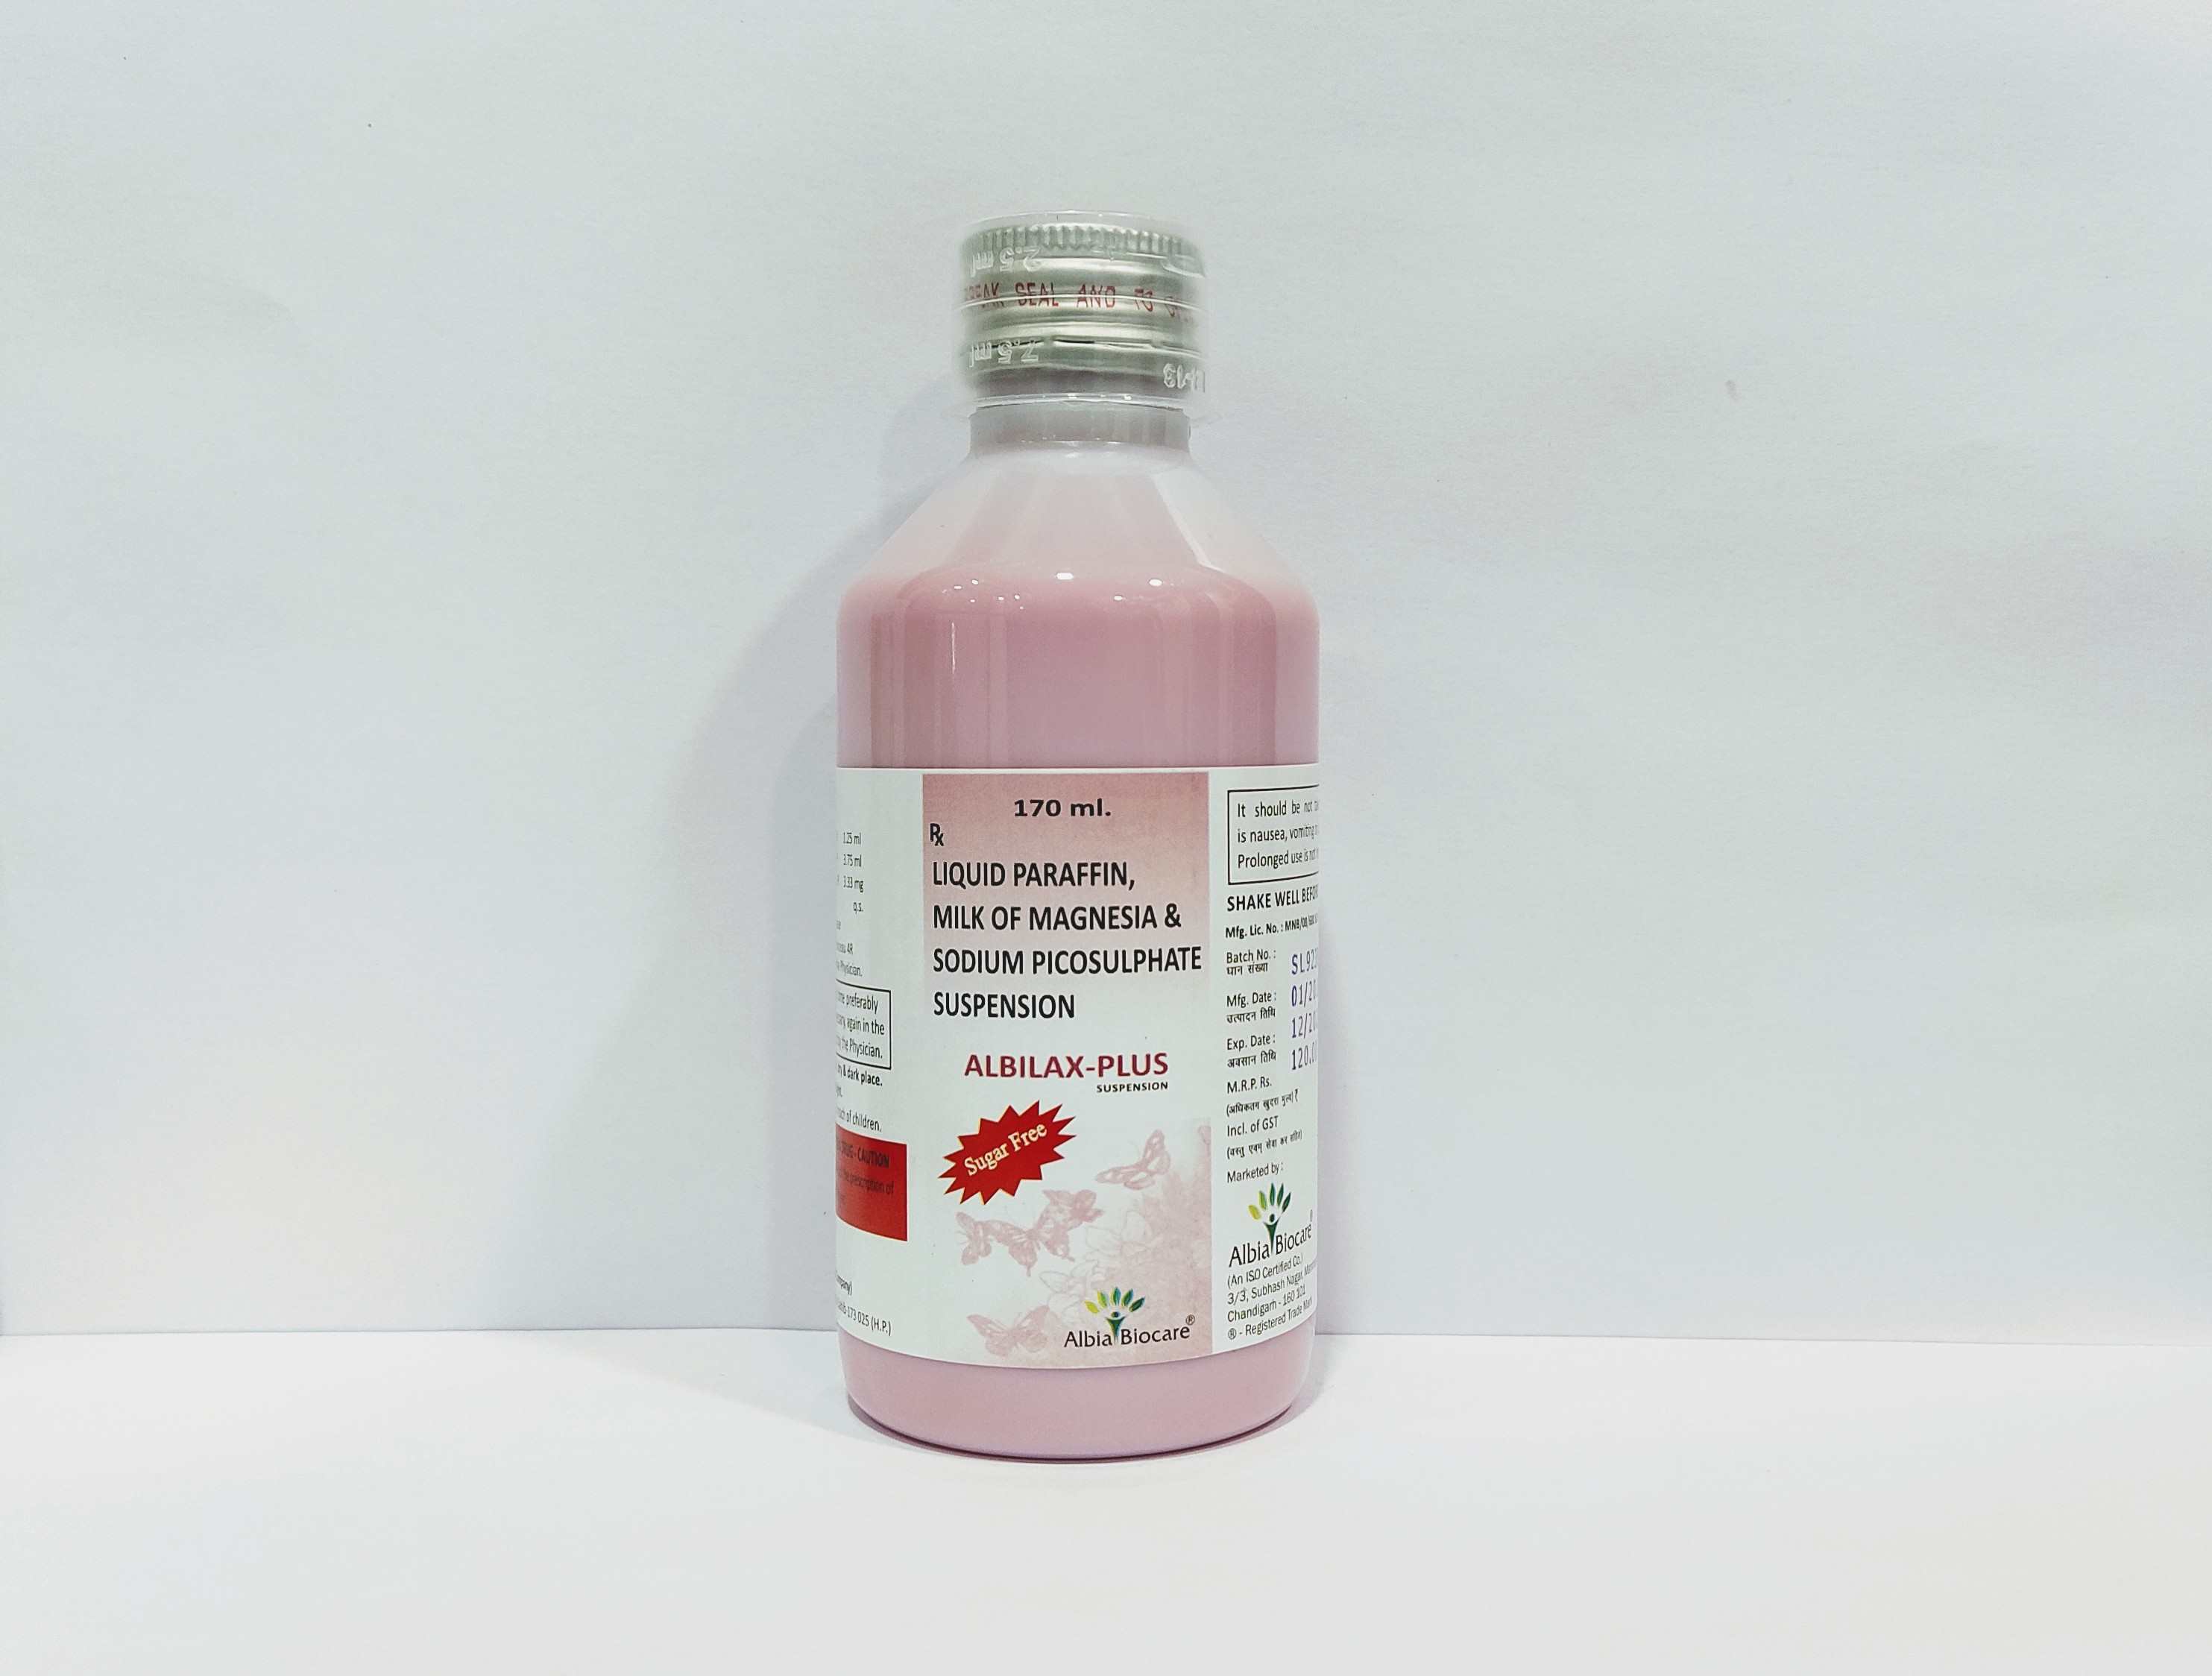 ALBILAX-Plus Syrup | Loght Liquid Paraffin 1.25mg + Milk of Magnesia 3.75mg + Sodium Picosulphate 3.33mg (per 5 ml.)